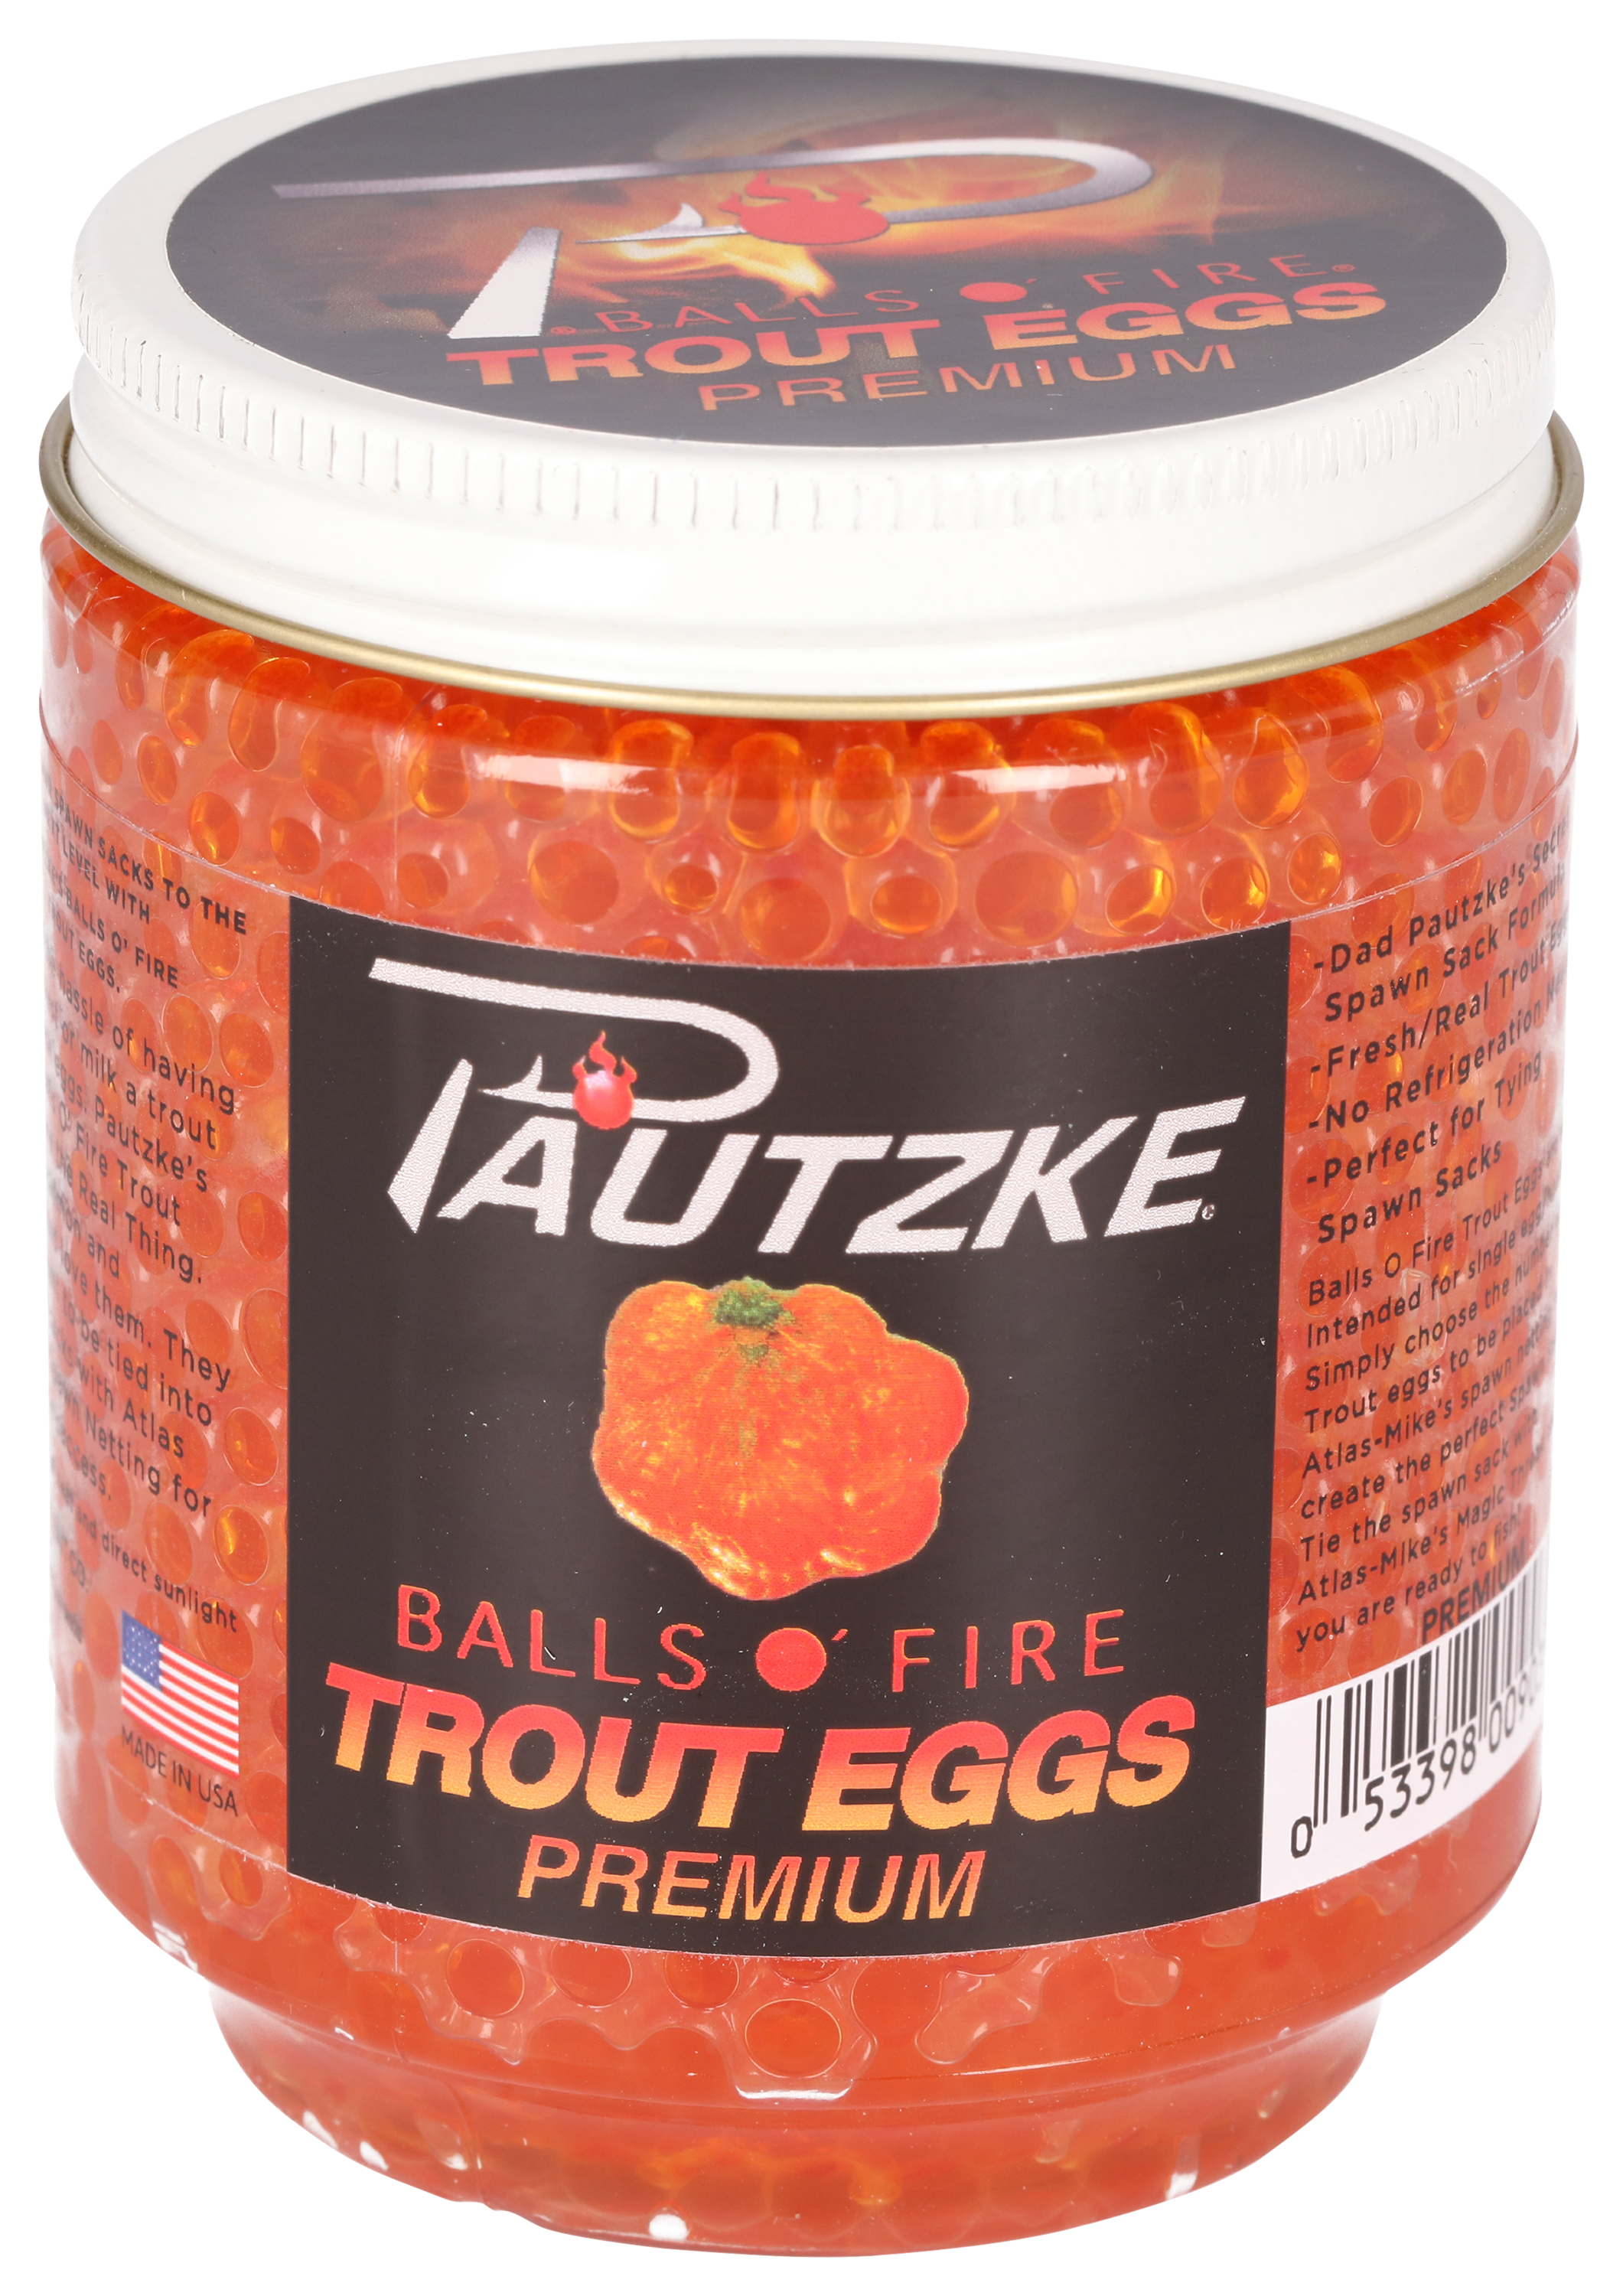 Pautzke Balls O' Fire Trout Eggs